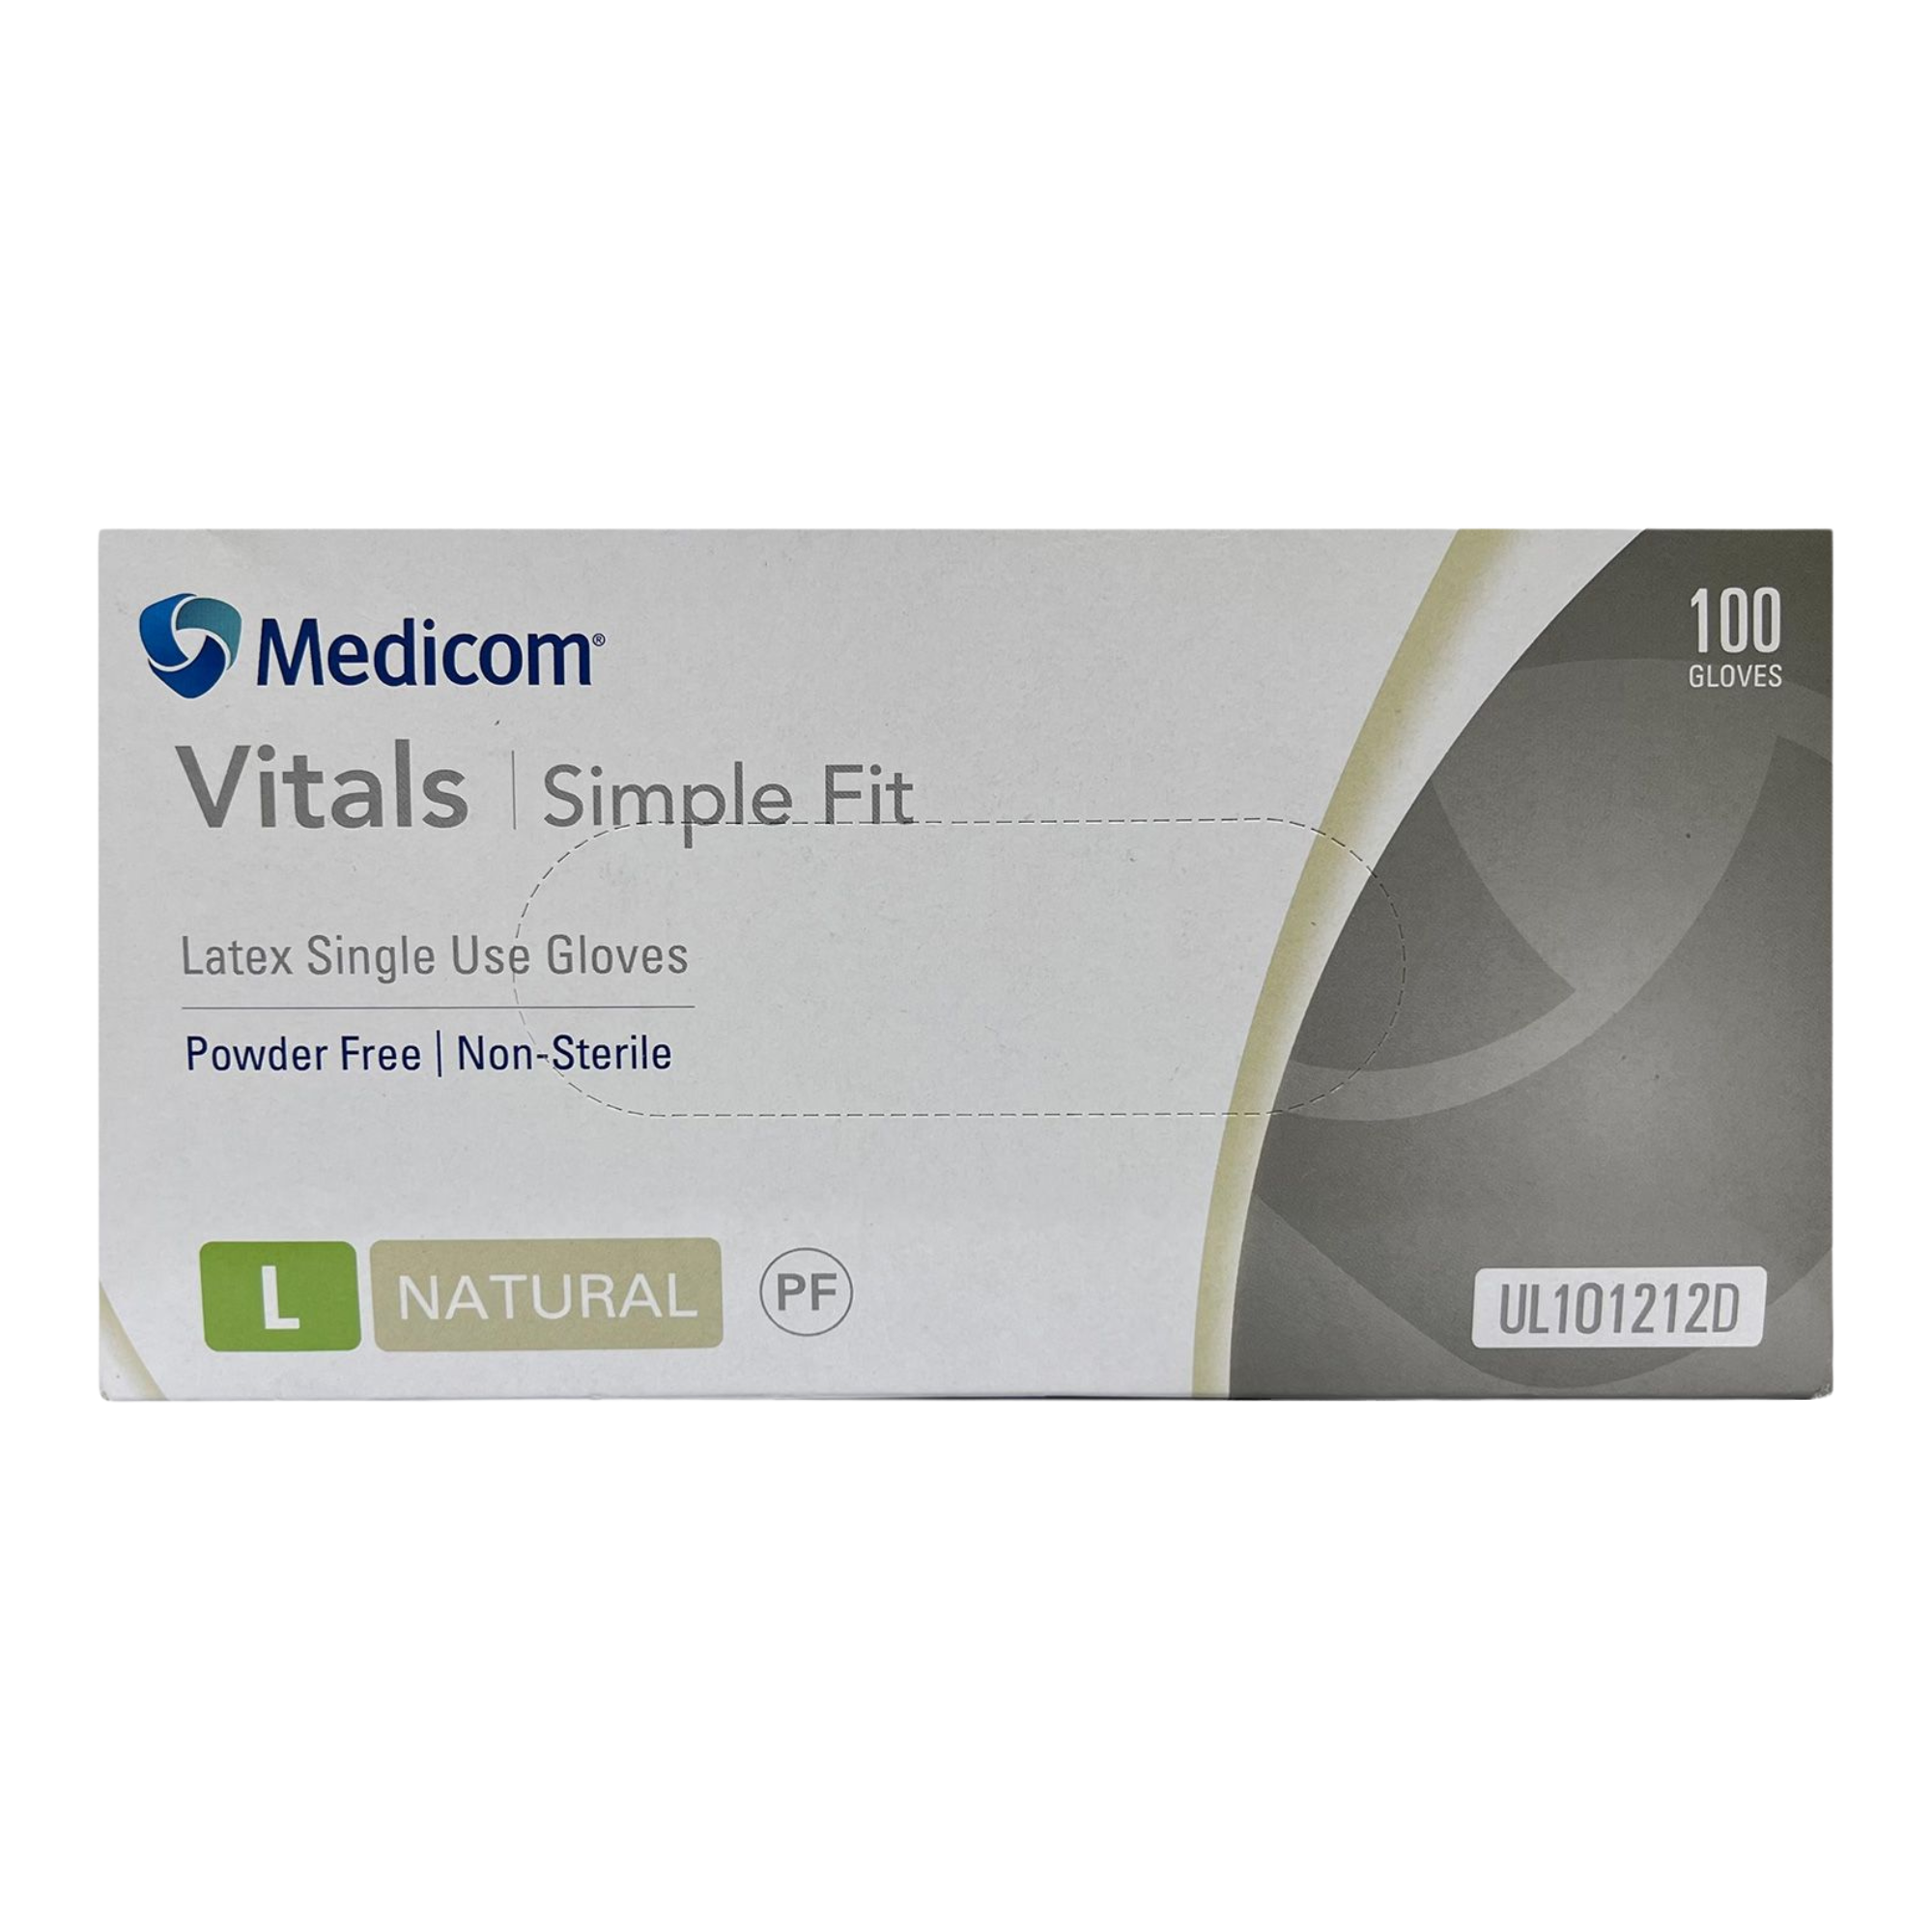 Medicom Vitals Simple Fit Latex Single Use Gloves Powder Free Large 100 Units Per Box Examination